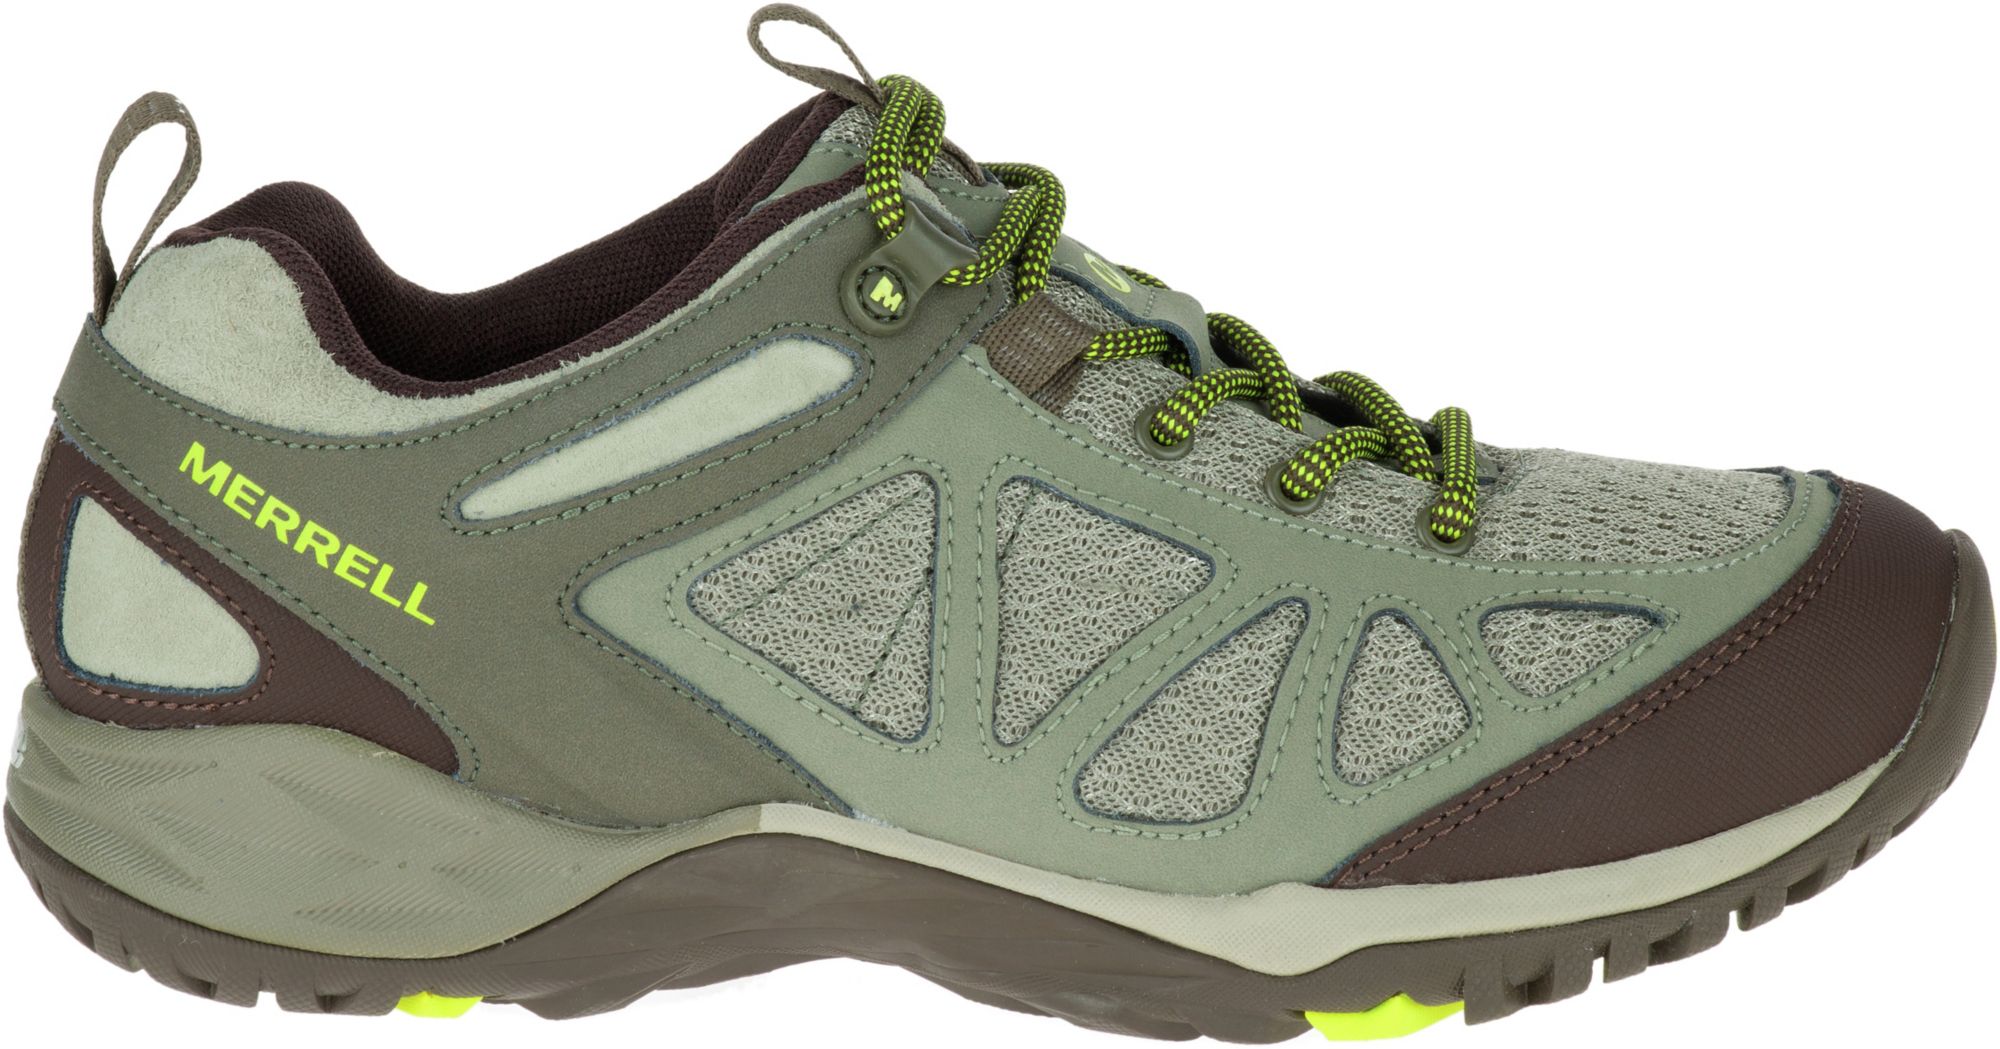 merrell nubuck leather comfort hiking shoes